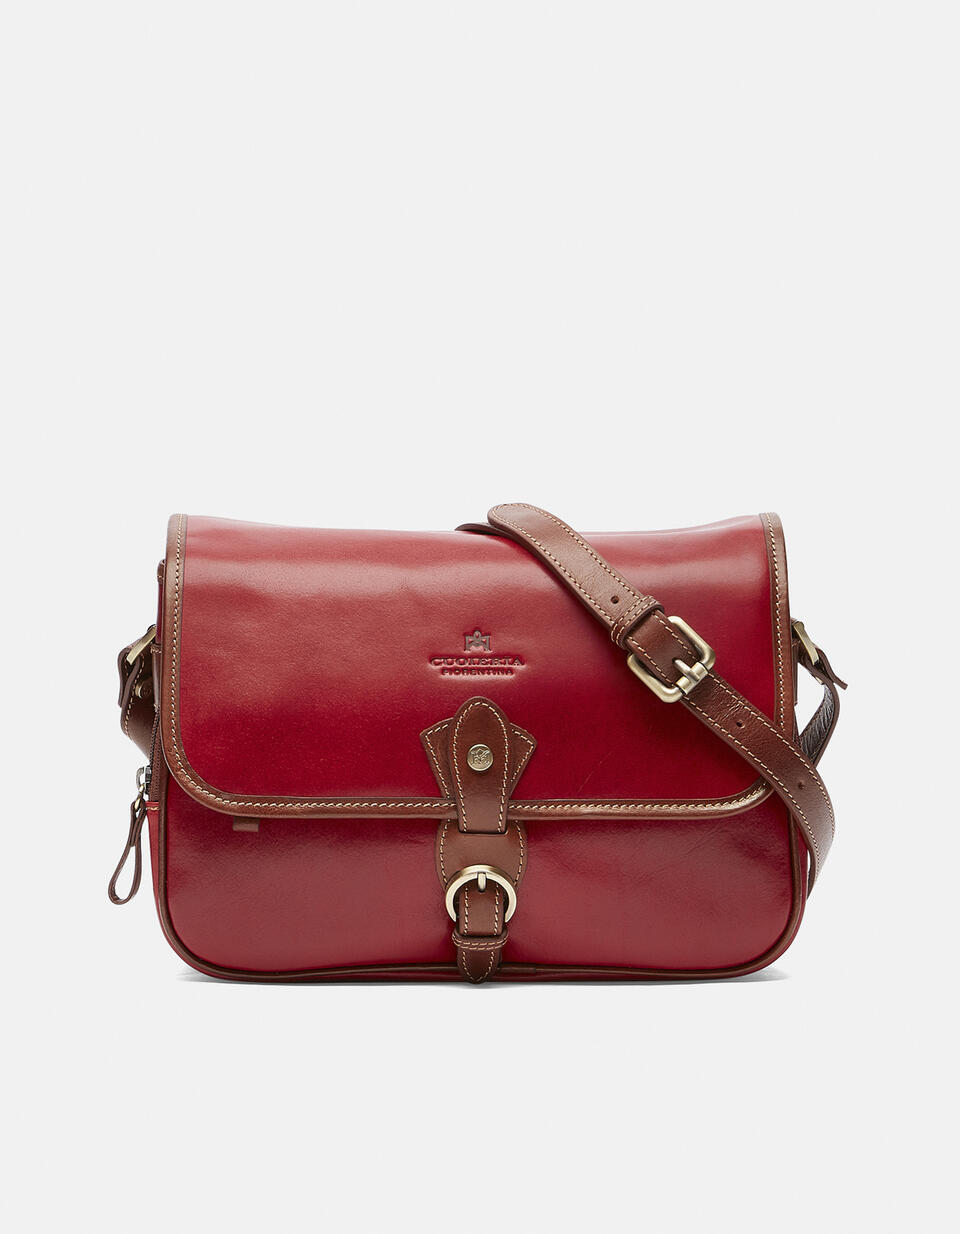 Big Leather messenger bag - Messenger Bags - WOMEN'S BAGS | bags ROSSOBICOLORE - Messenger Bags - WOMEN'S BAGS | bagsCuoieria Fiorentina